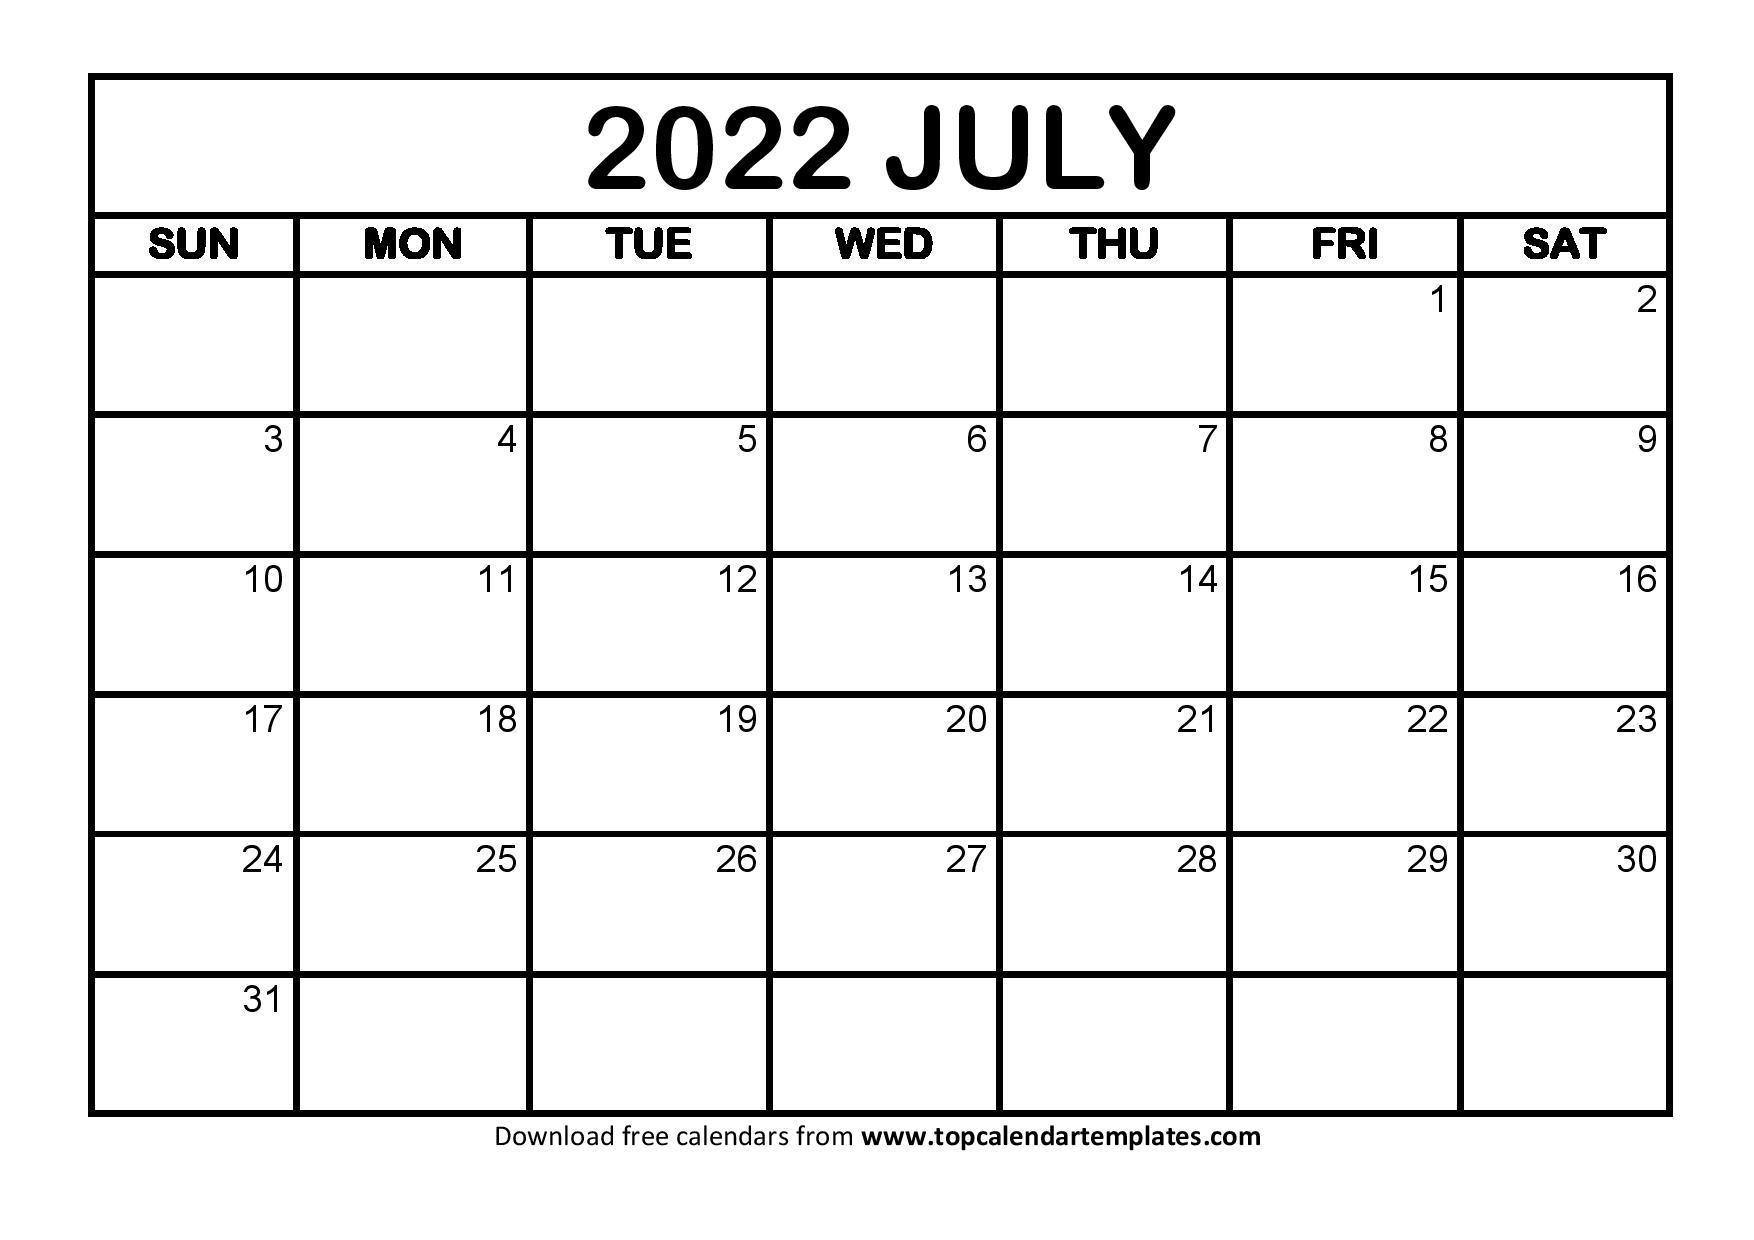 Print A Calendar July 2022 Printable Calendar July 2022 Templates - Pdf, Word, Excel